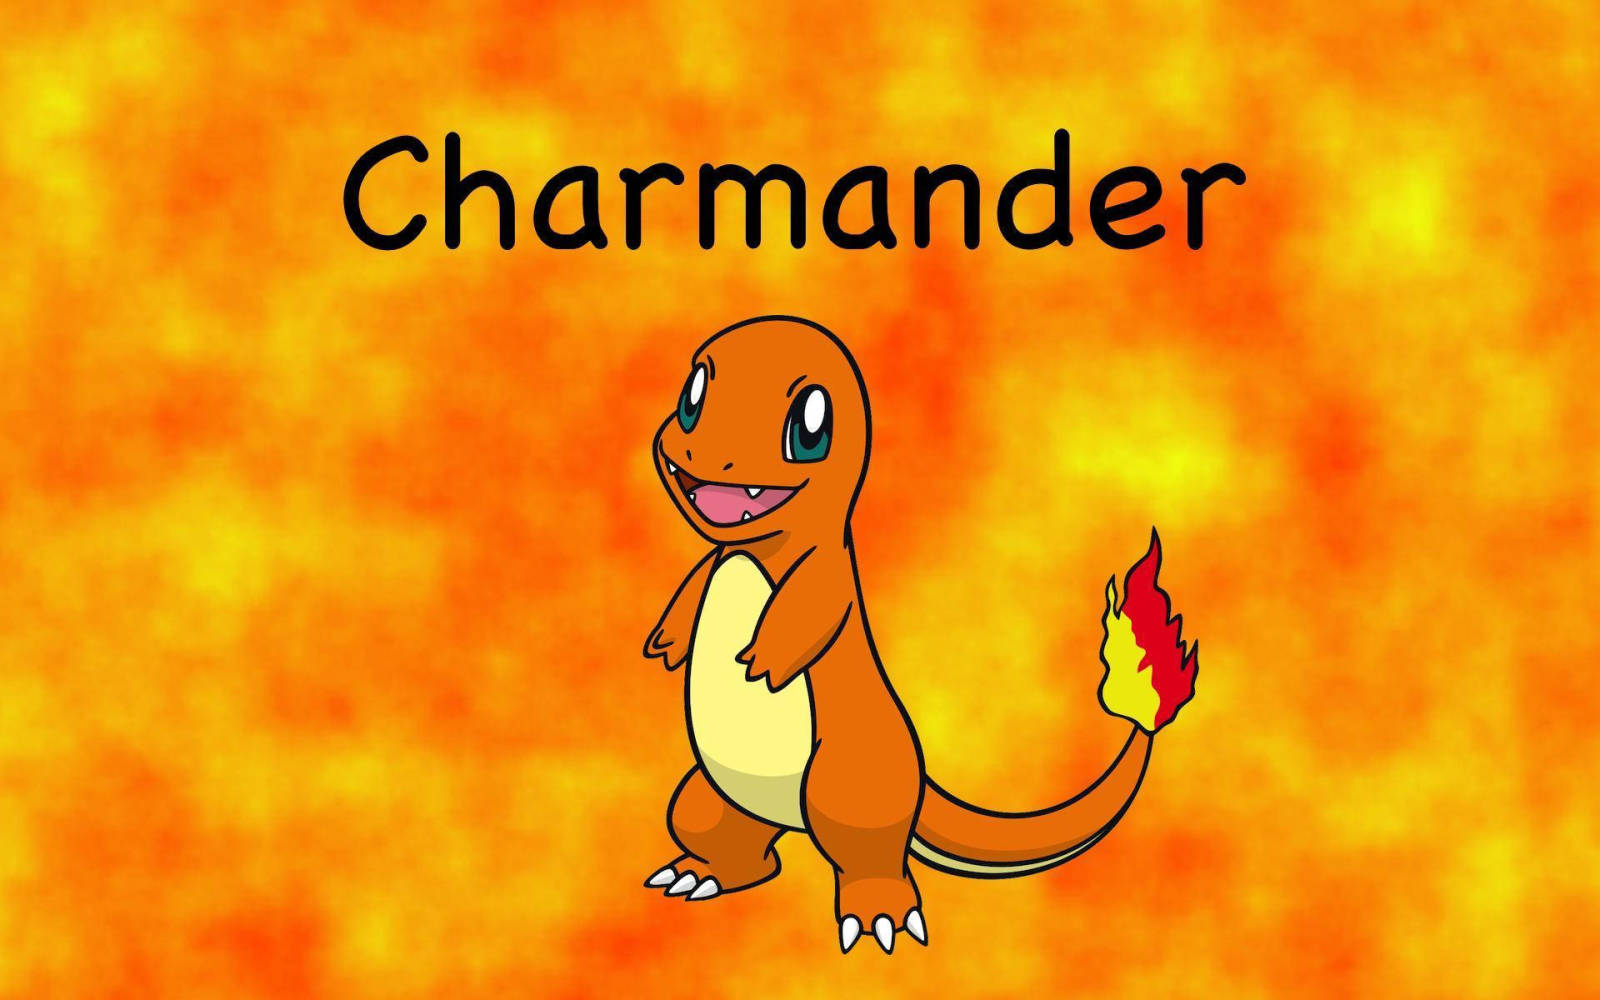 Charmander Pokemon - Original image